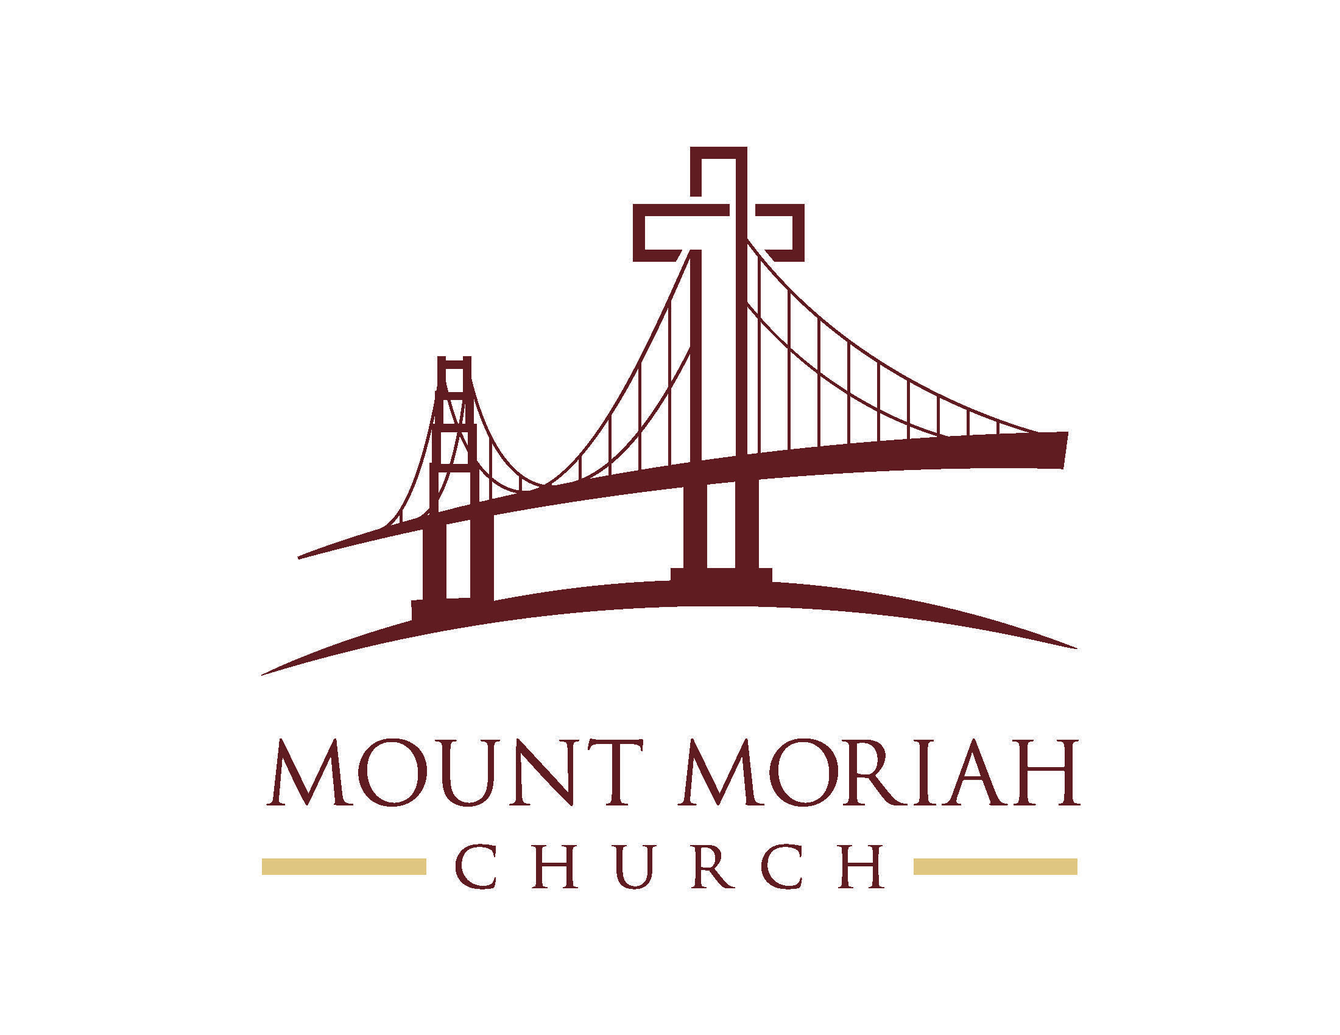 Mount Moriah Church